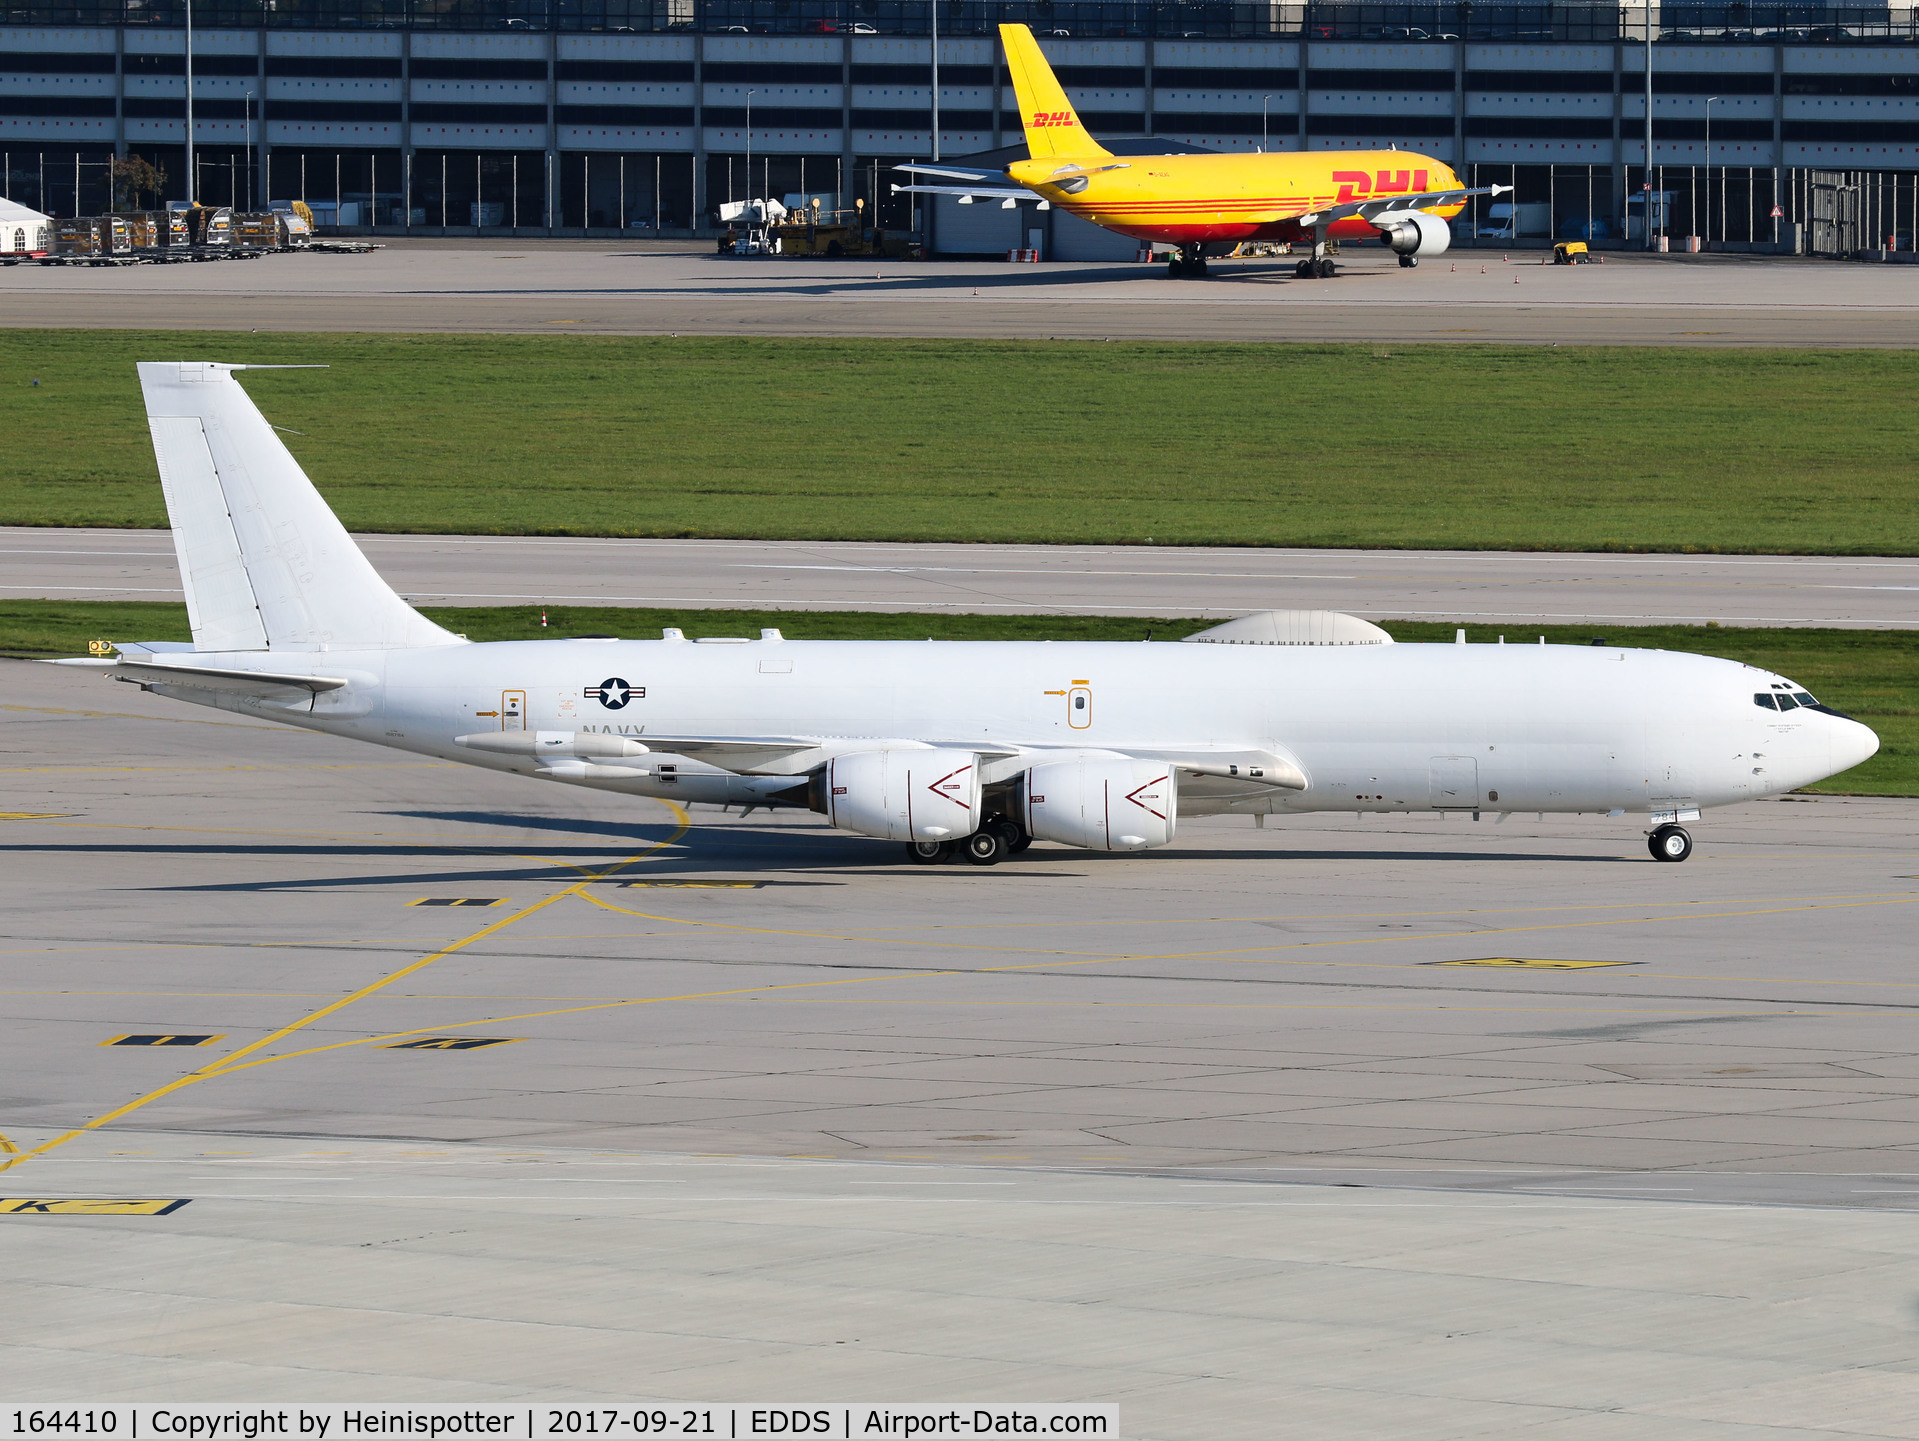 164410, 1991 Boeing E-6A Mercury C/N 24509, 164410 at Stuttgart Airport.